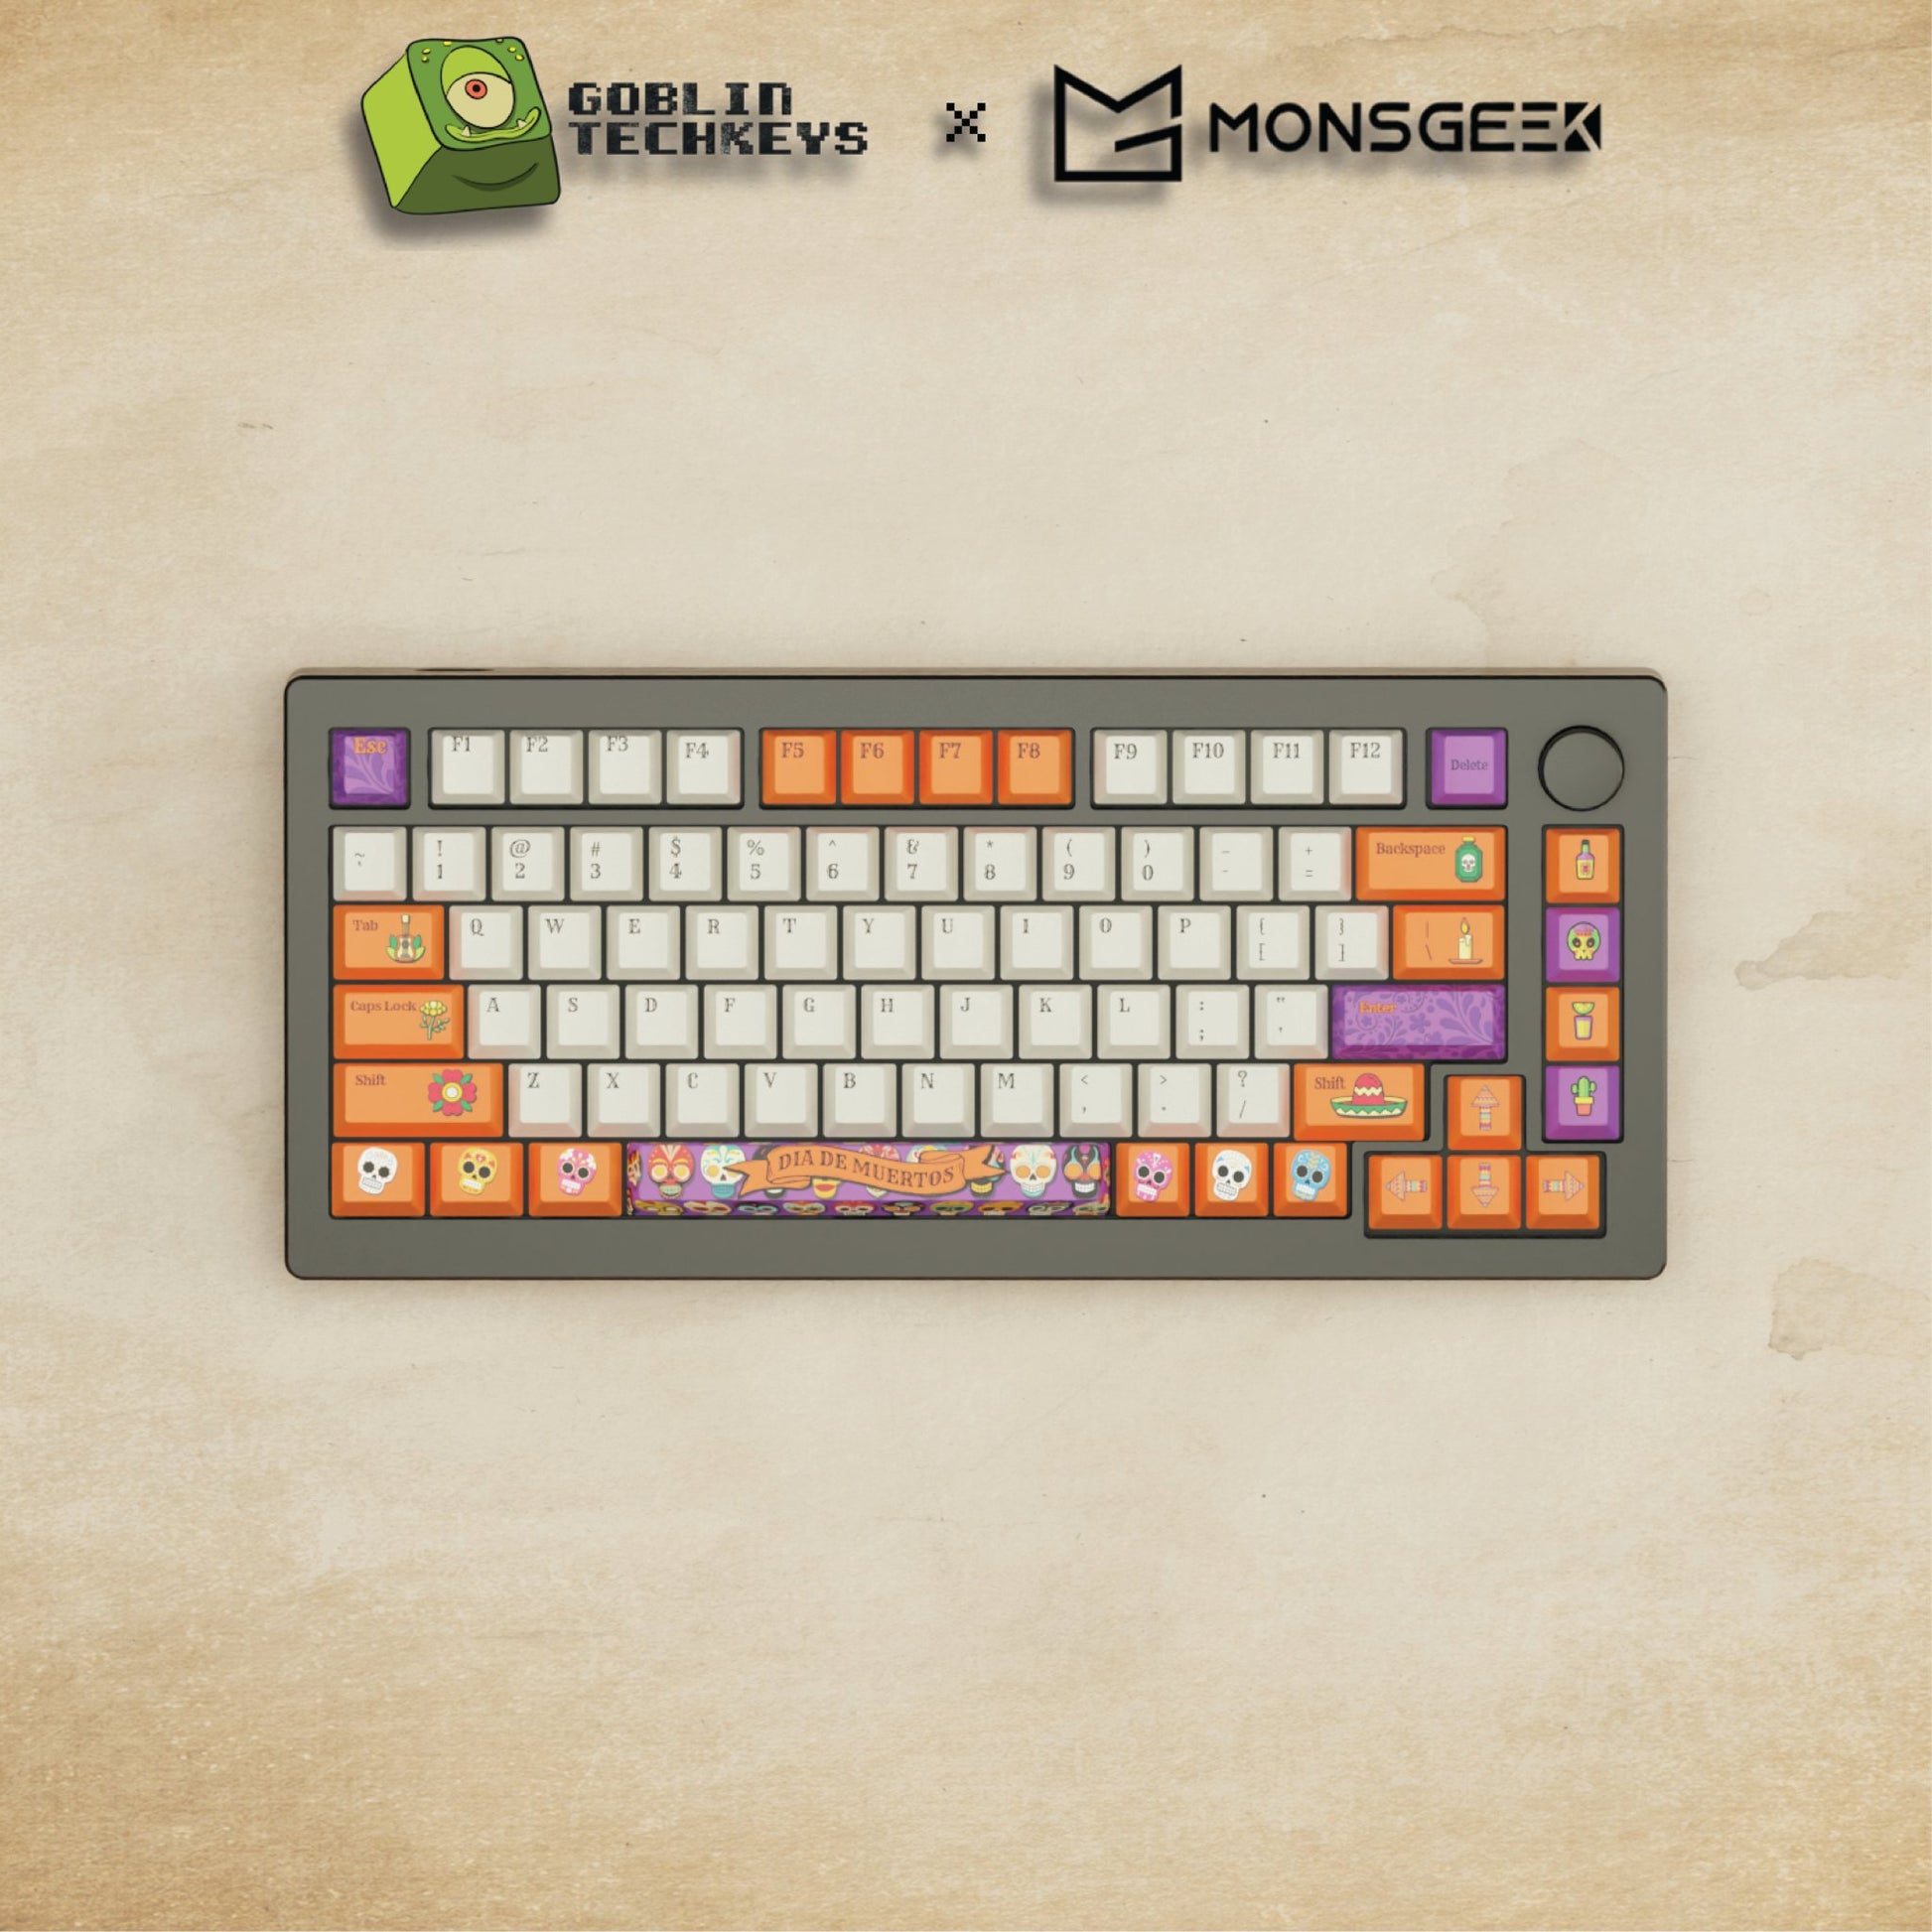 Monsgeek M1W - 75% Dia De Muertos Mechanical Keyboard - Goblintechkeys